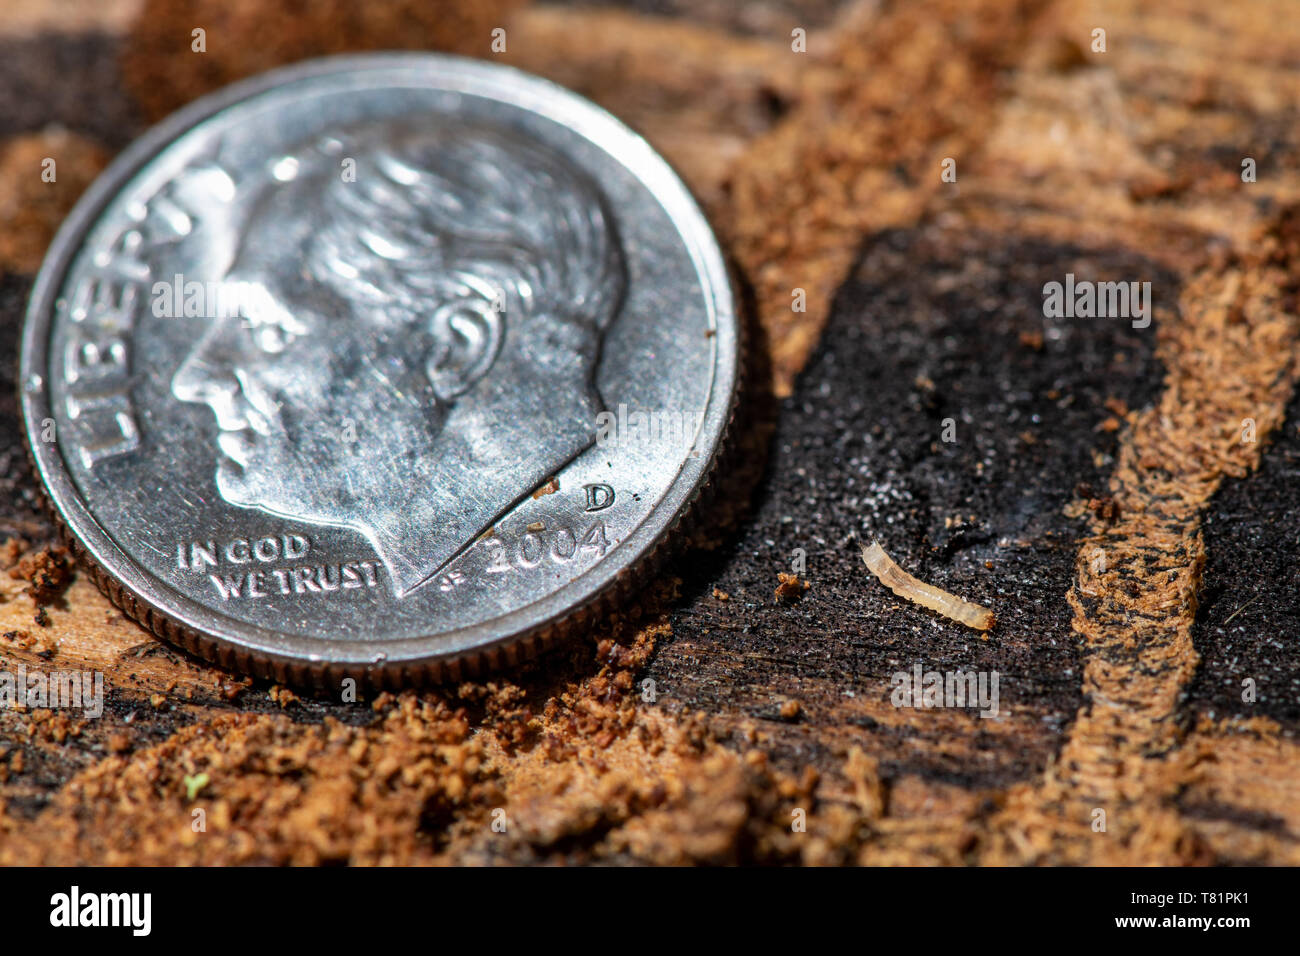 Beetle Larva in Ponderosa Pine Stock Photo